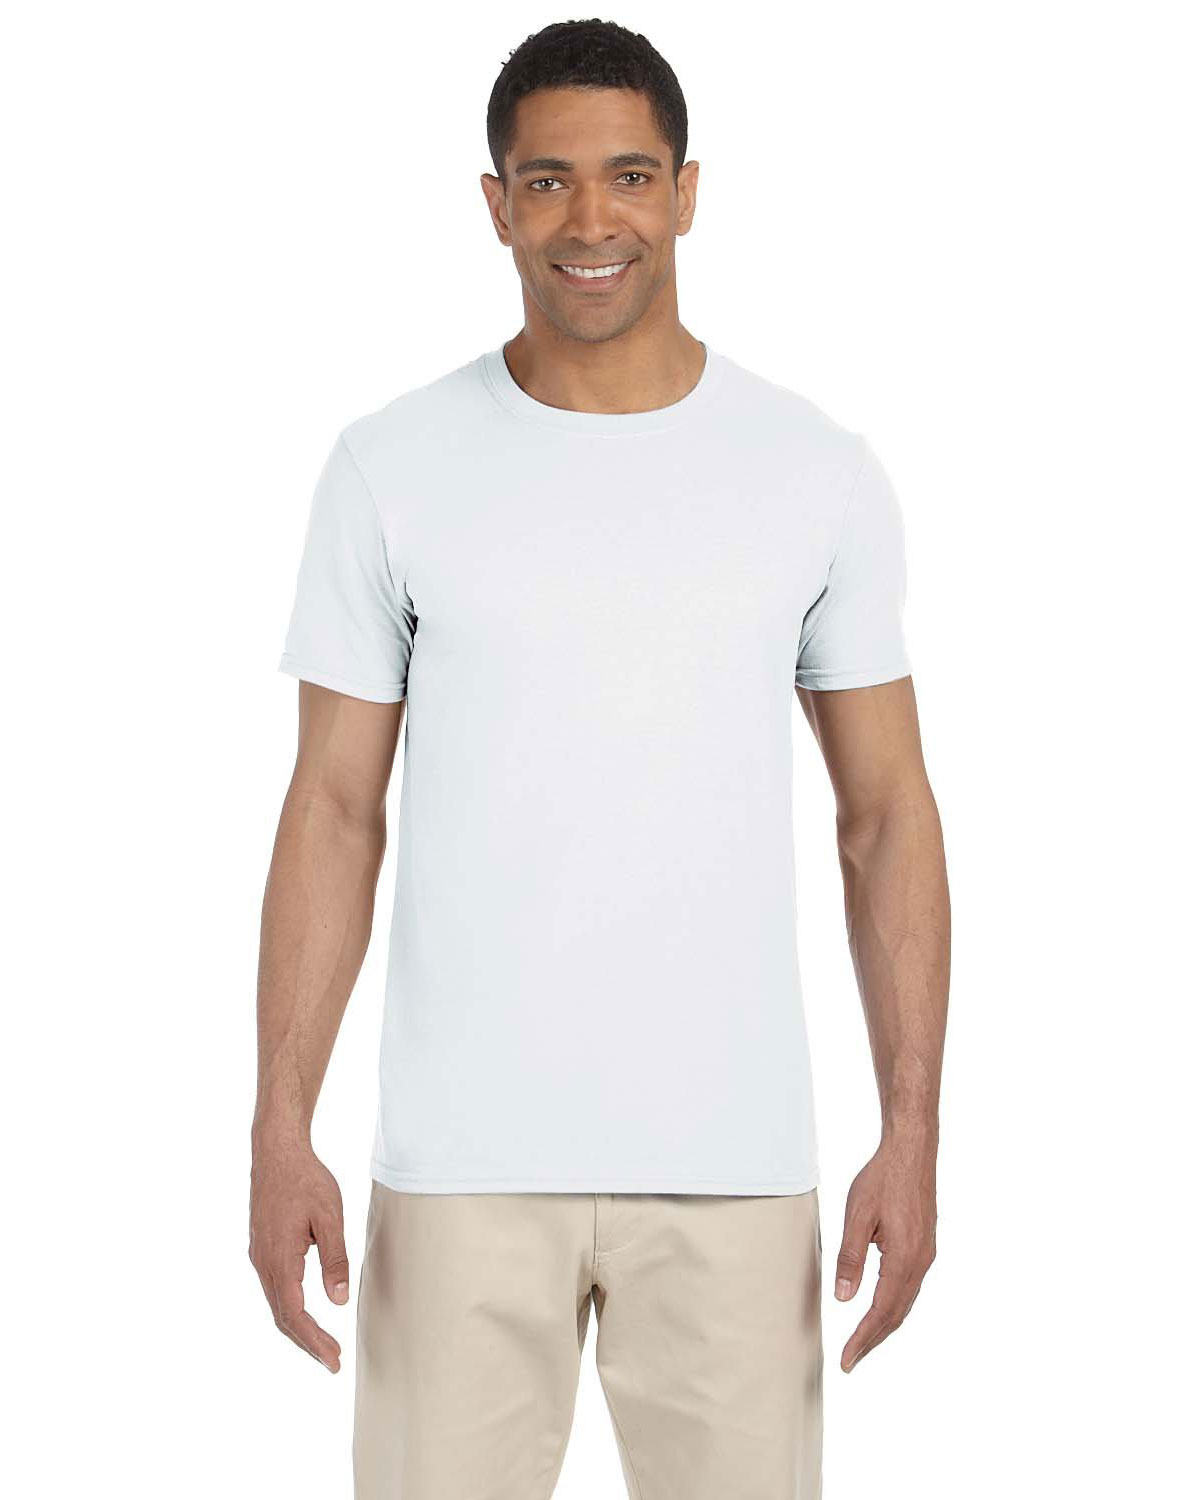 Gildan G640 Men's Softstyle 4.5 oz. T-Shirt at Apparelstation